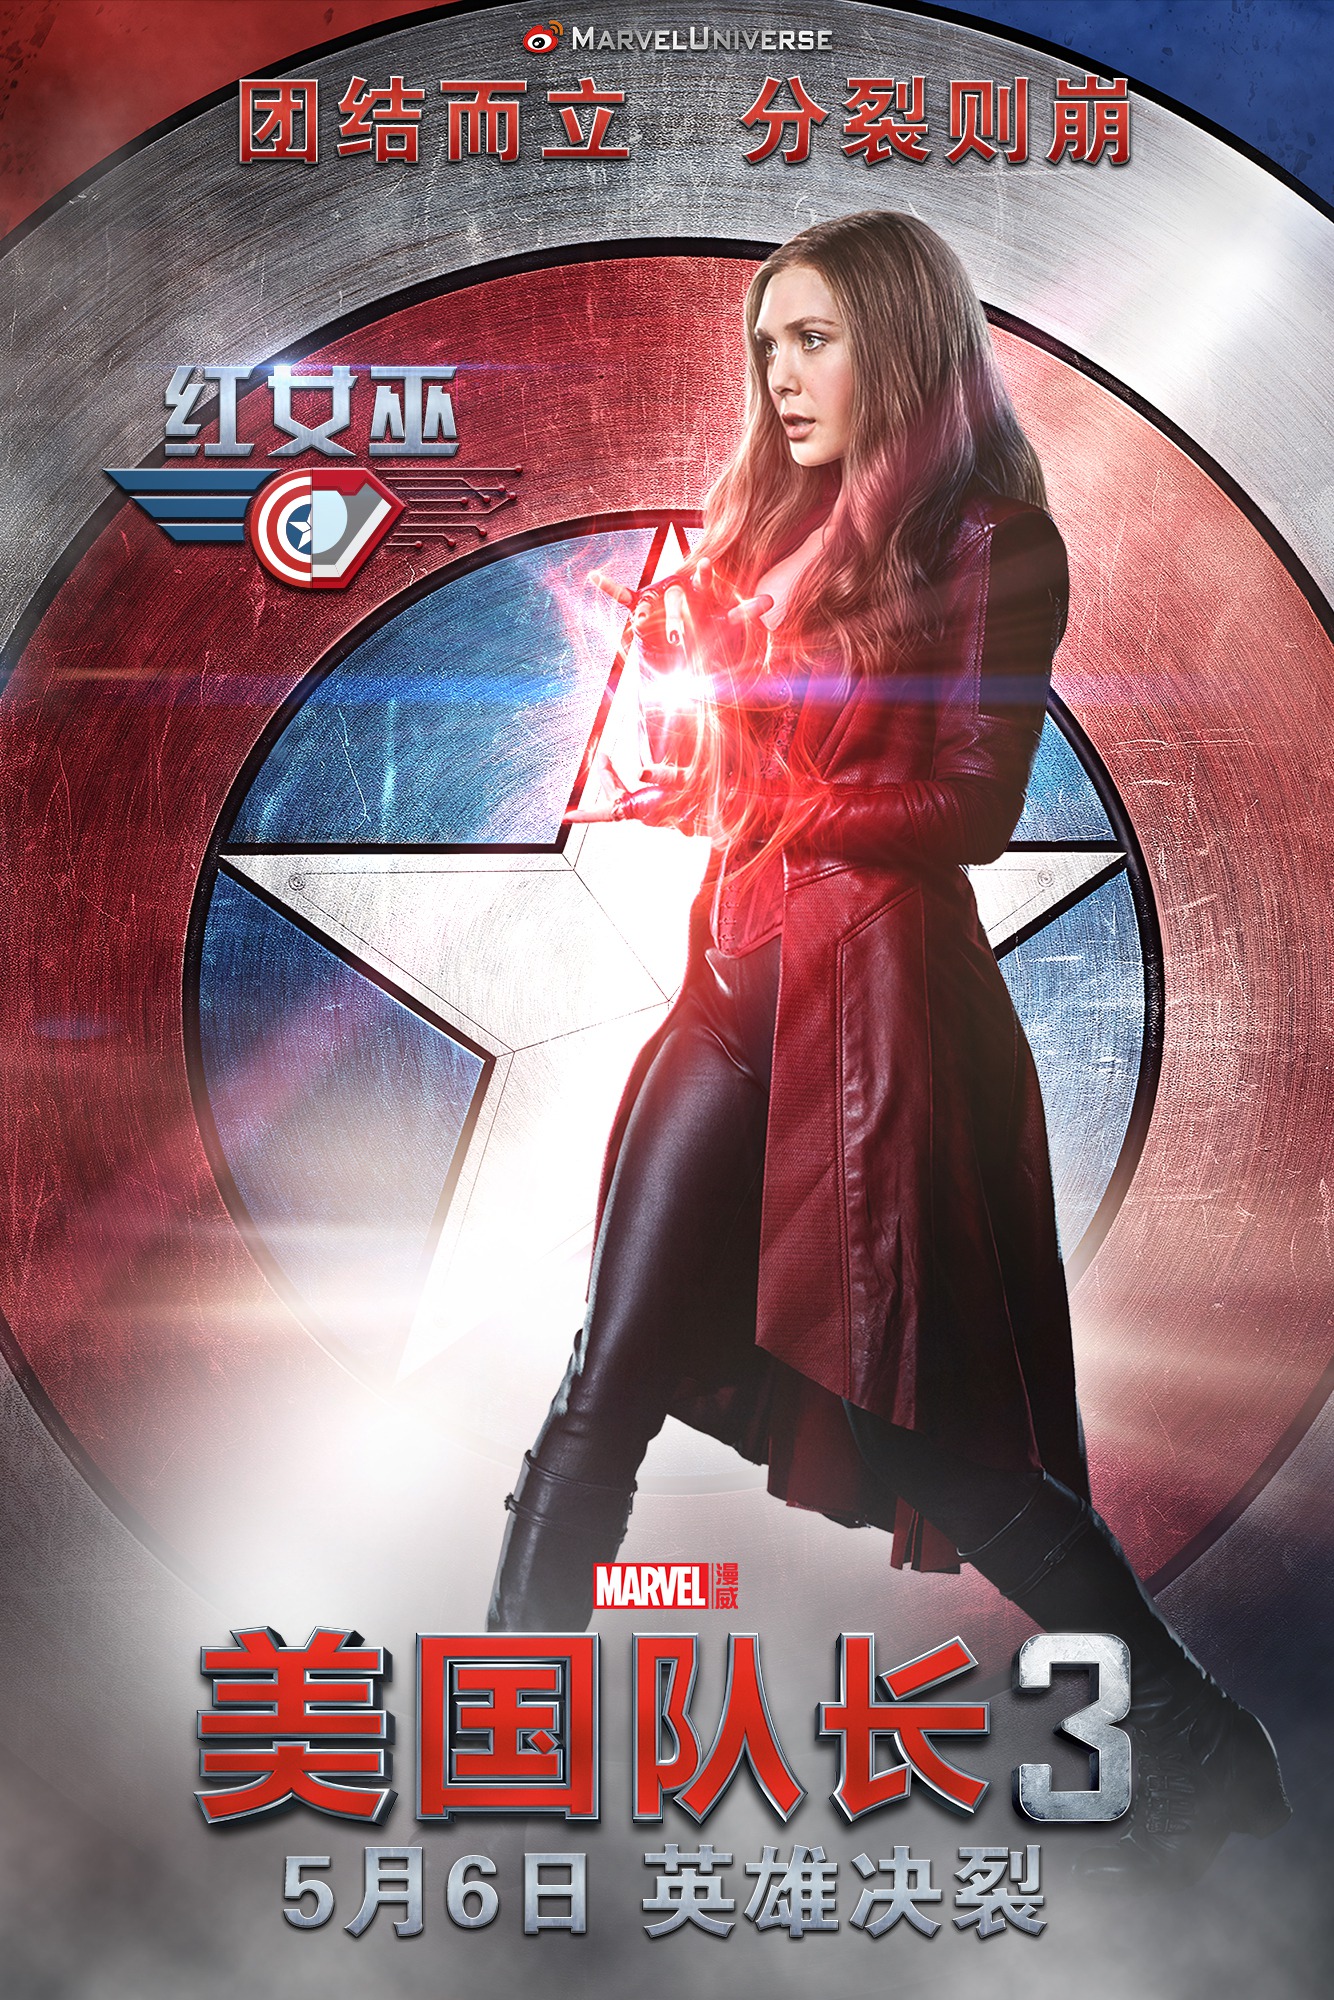 Mega Sized Movie Poster Image for Captain America: Civil War (#36 of 42)